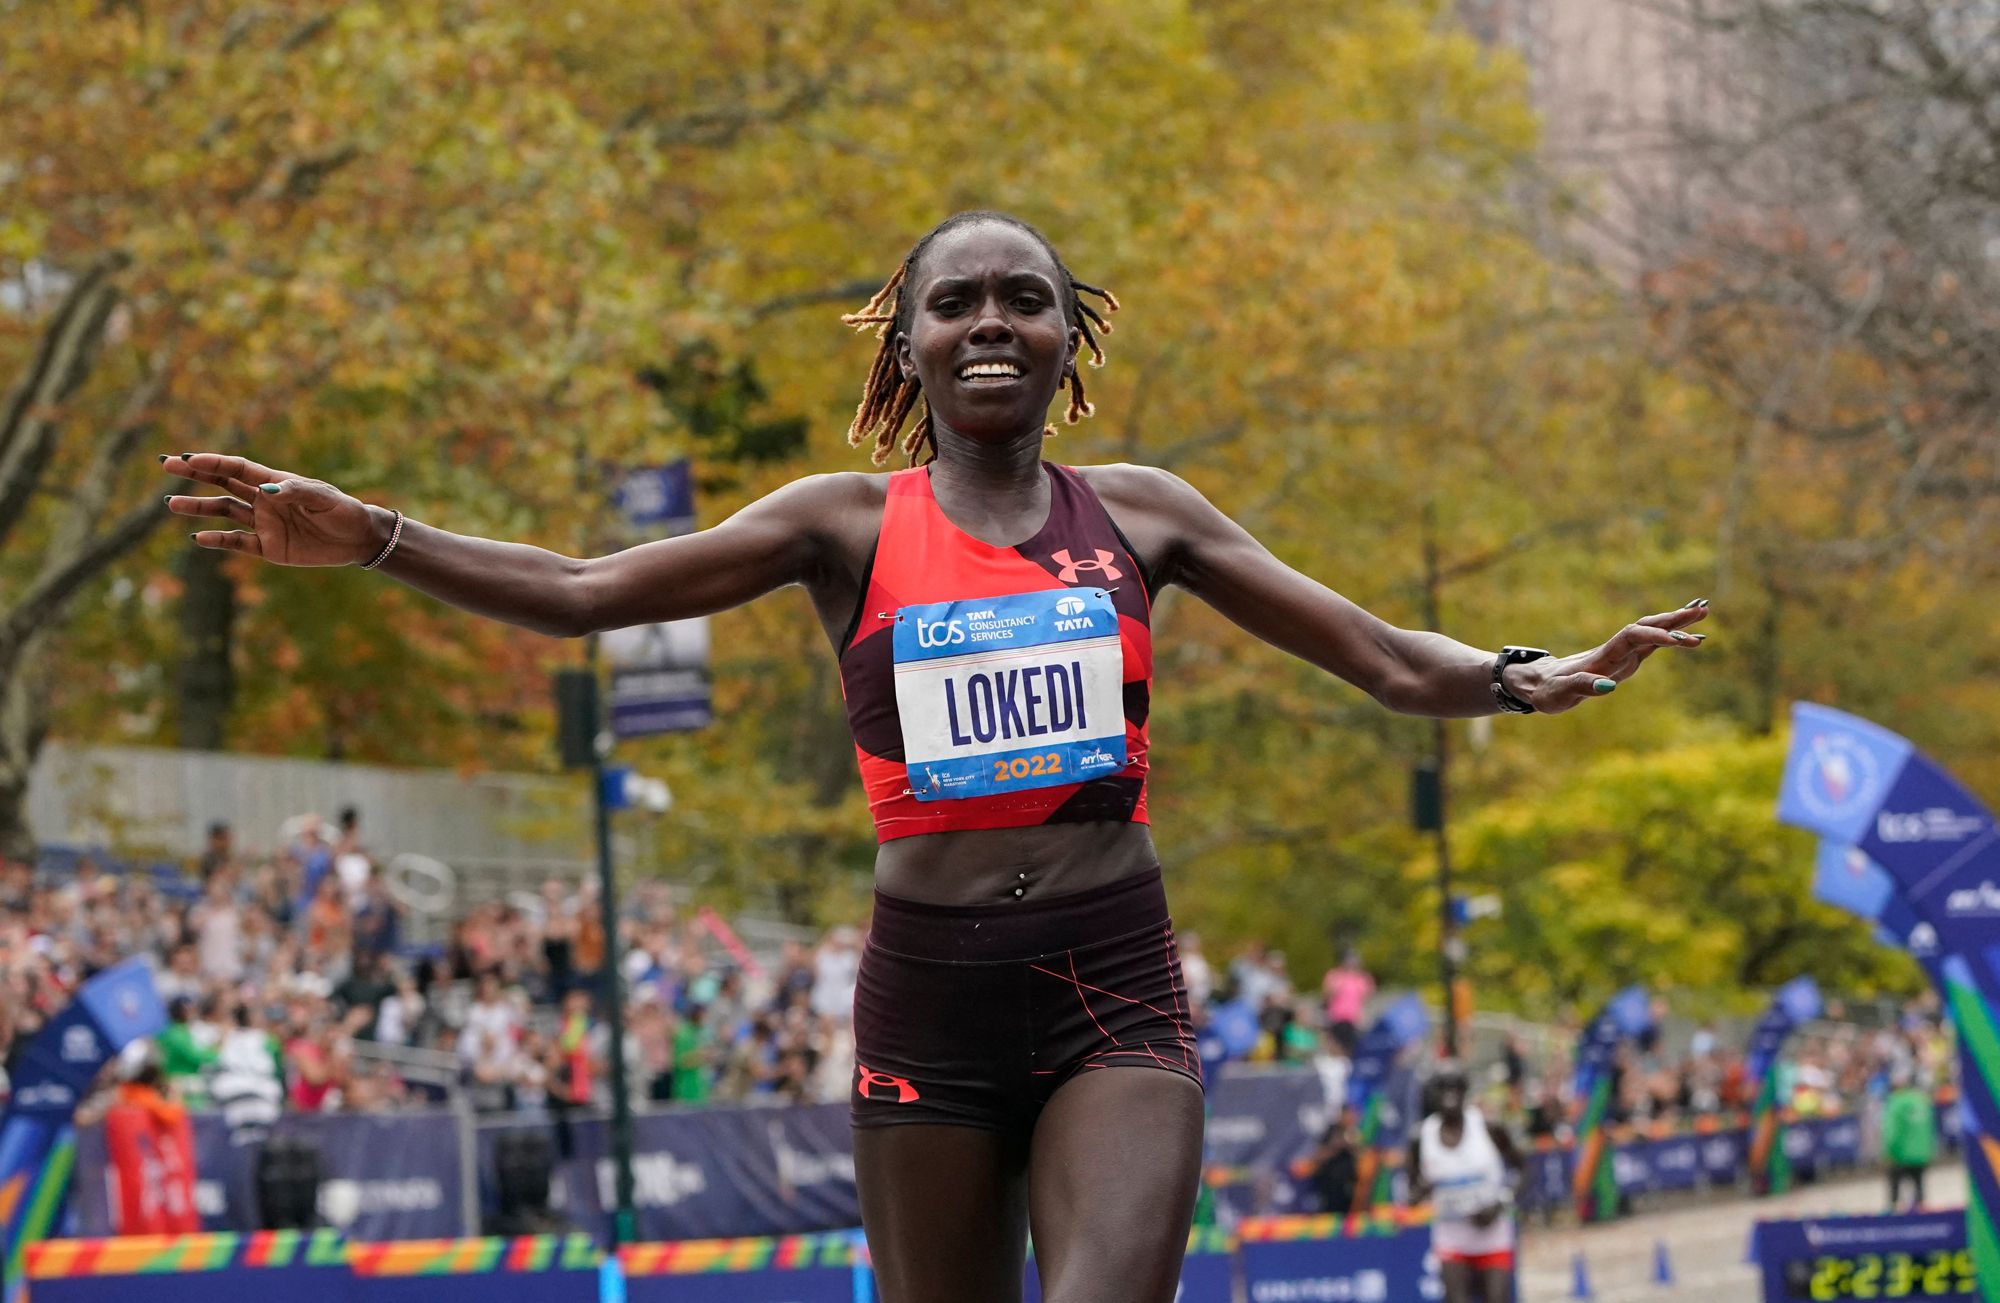 Sharon Lokedi wins the New York City Marathon